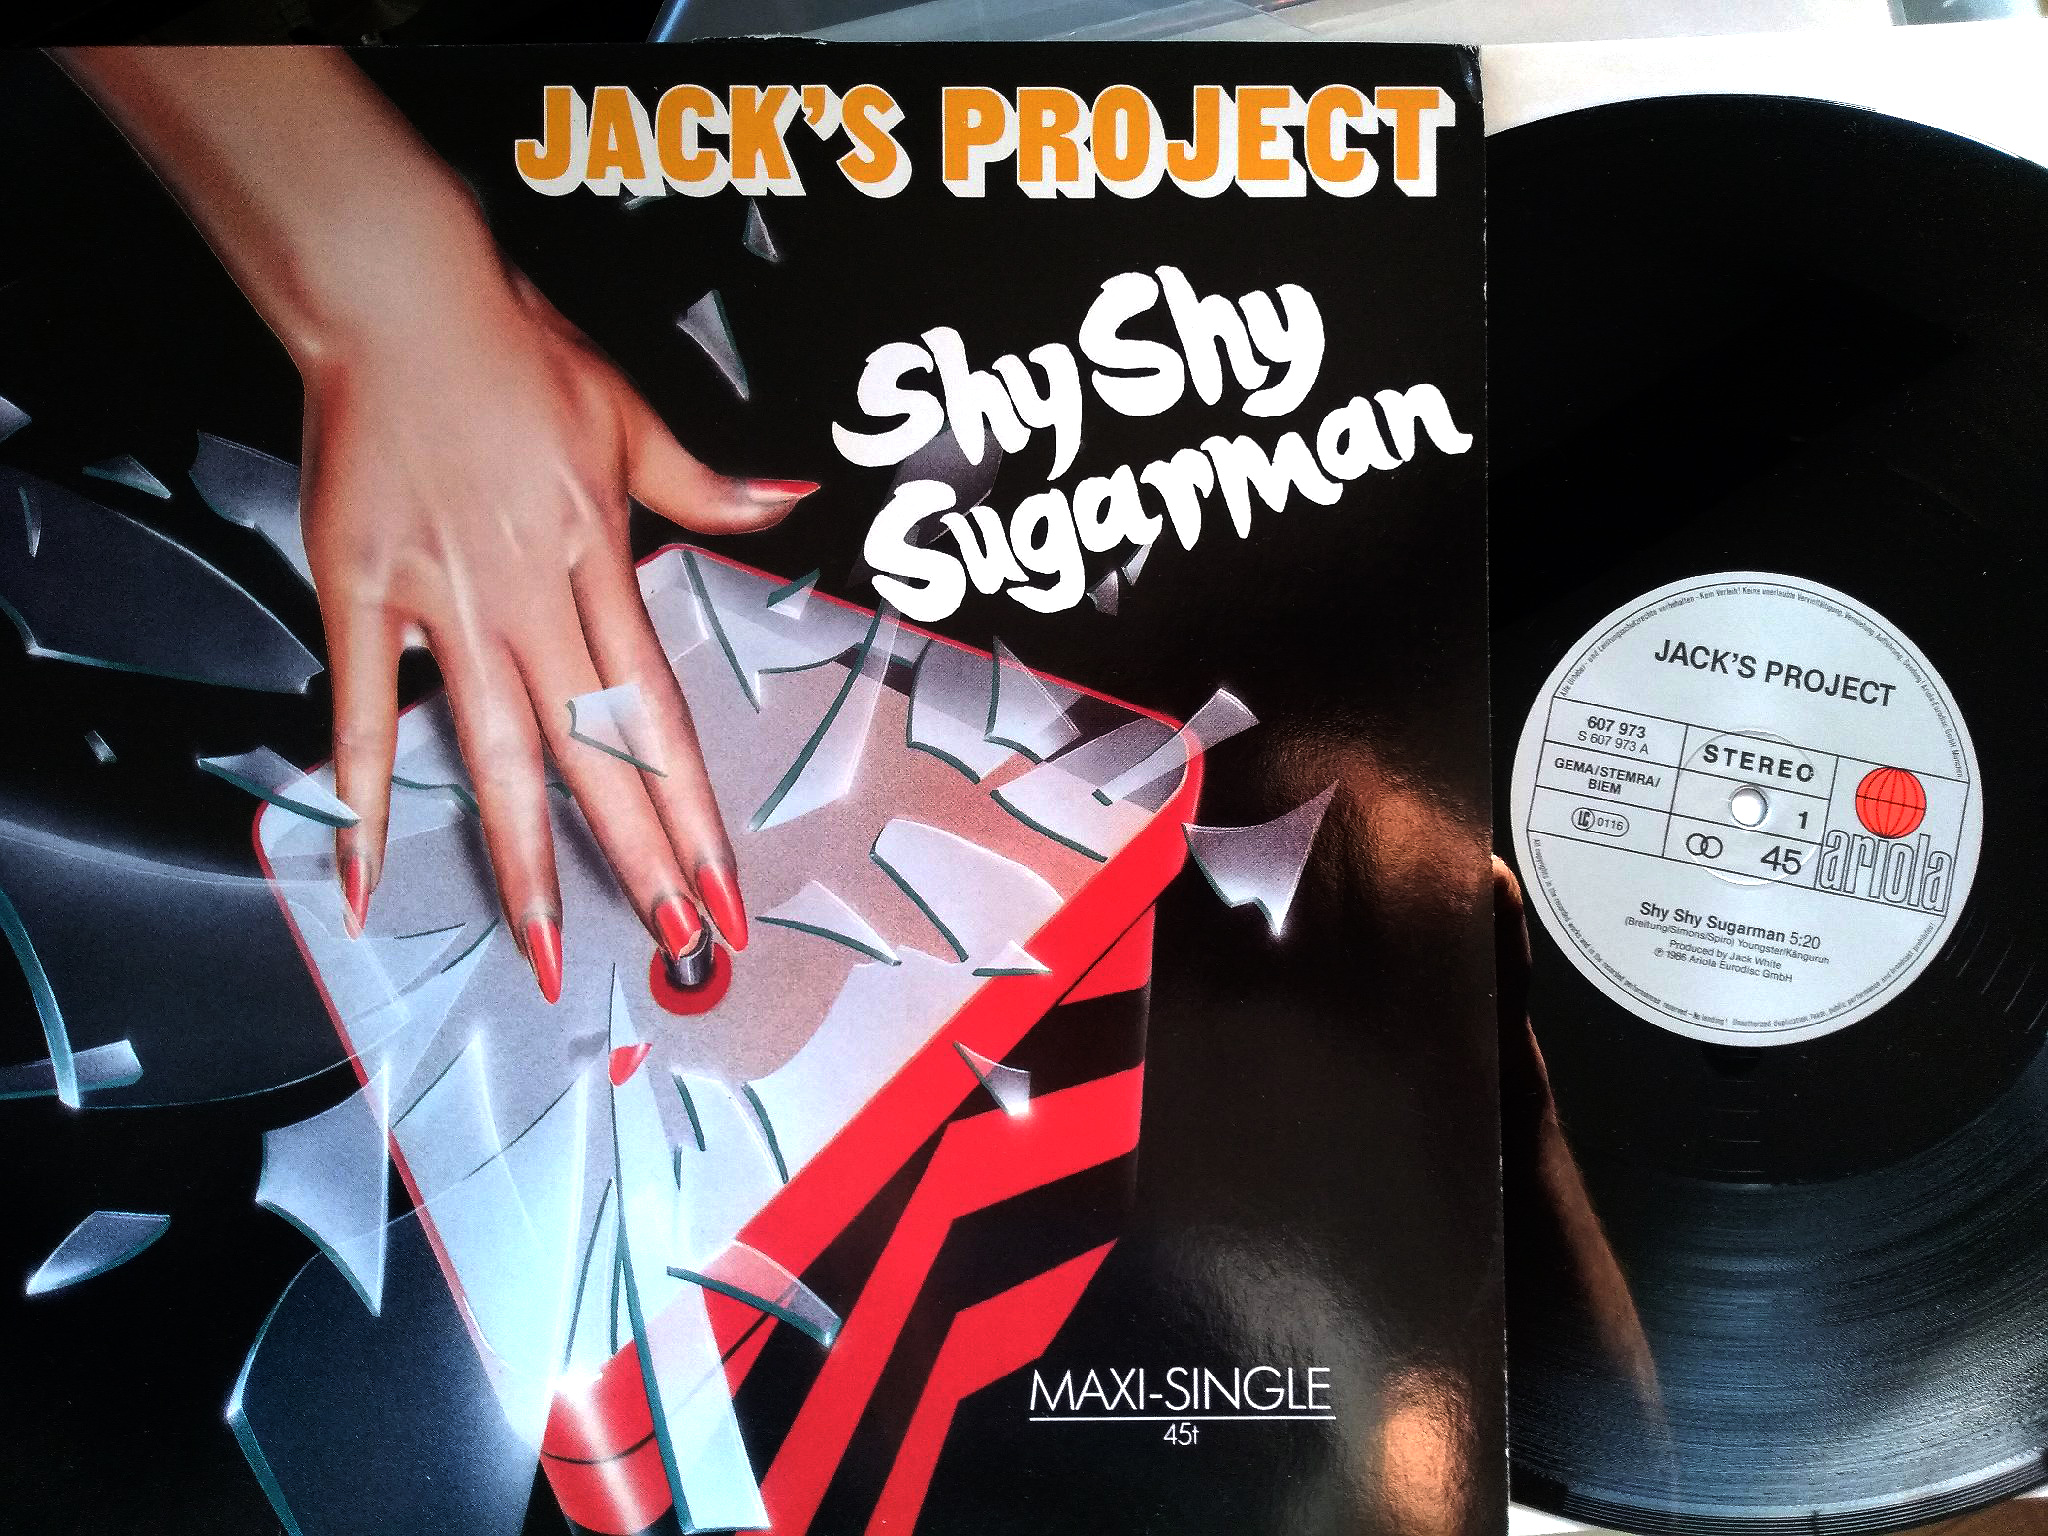 Jack's Project ‎- Shy Shy Sugarman